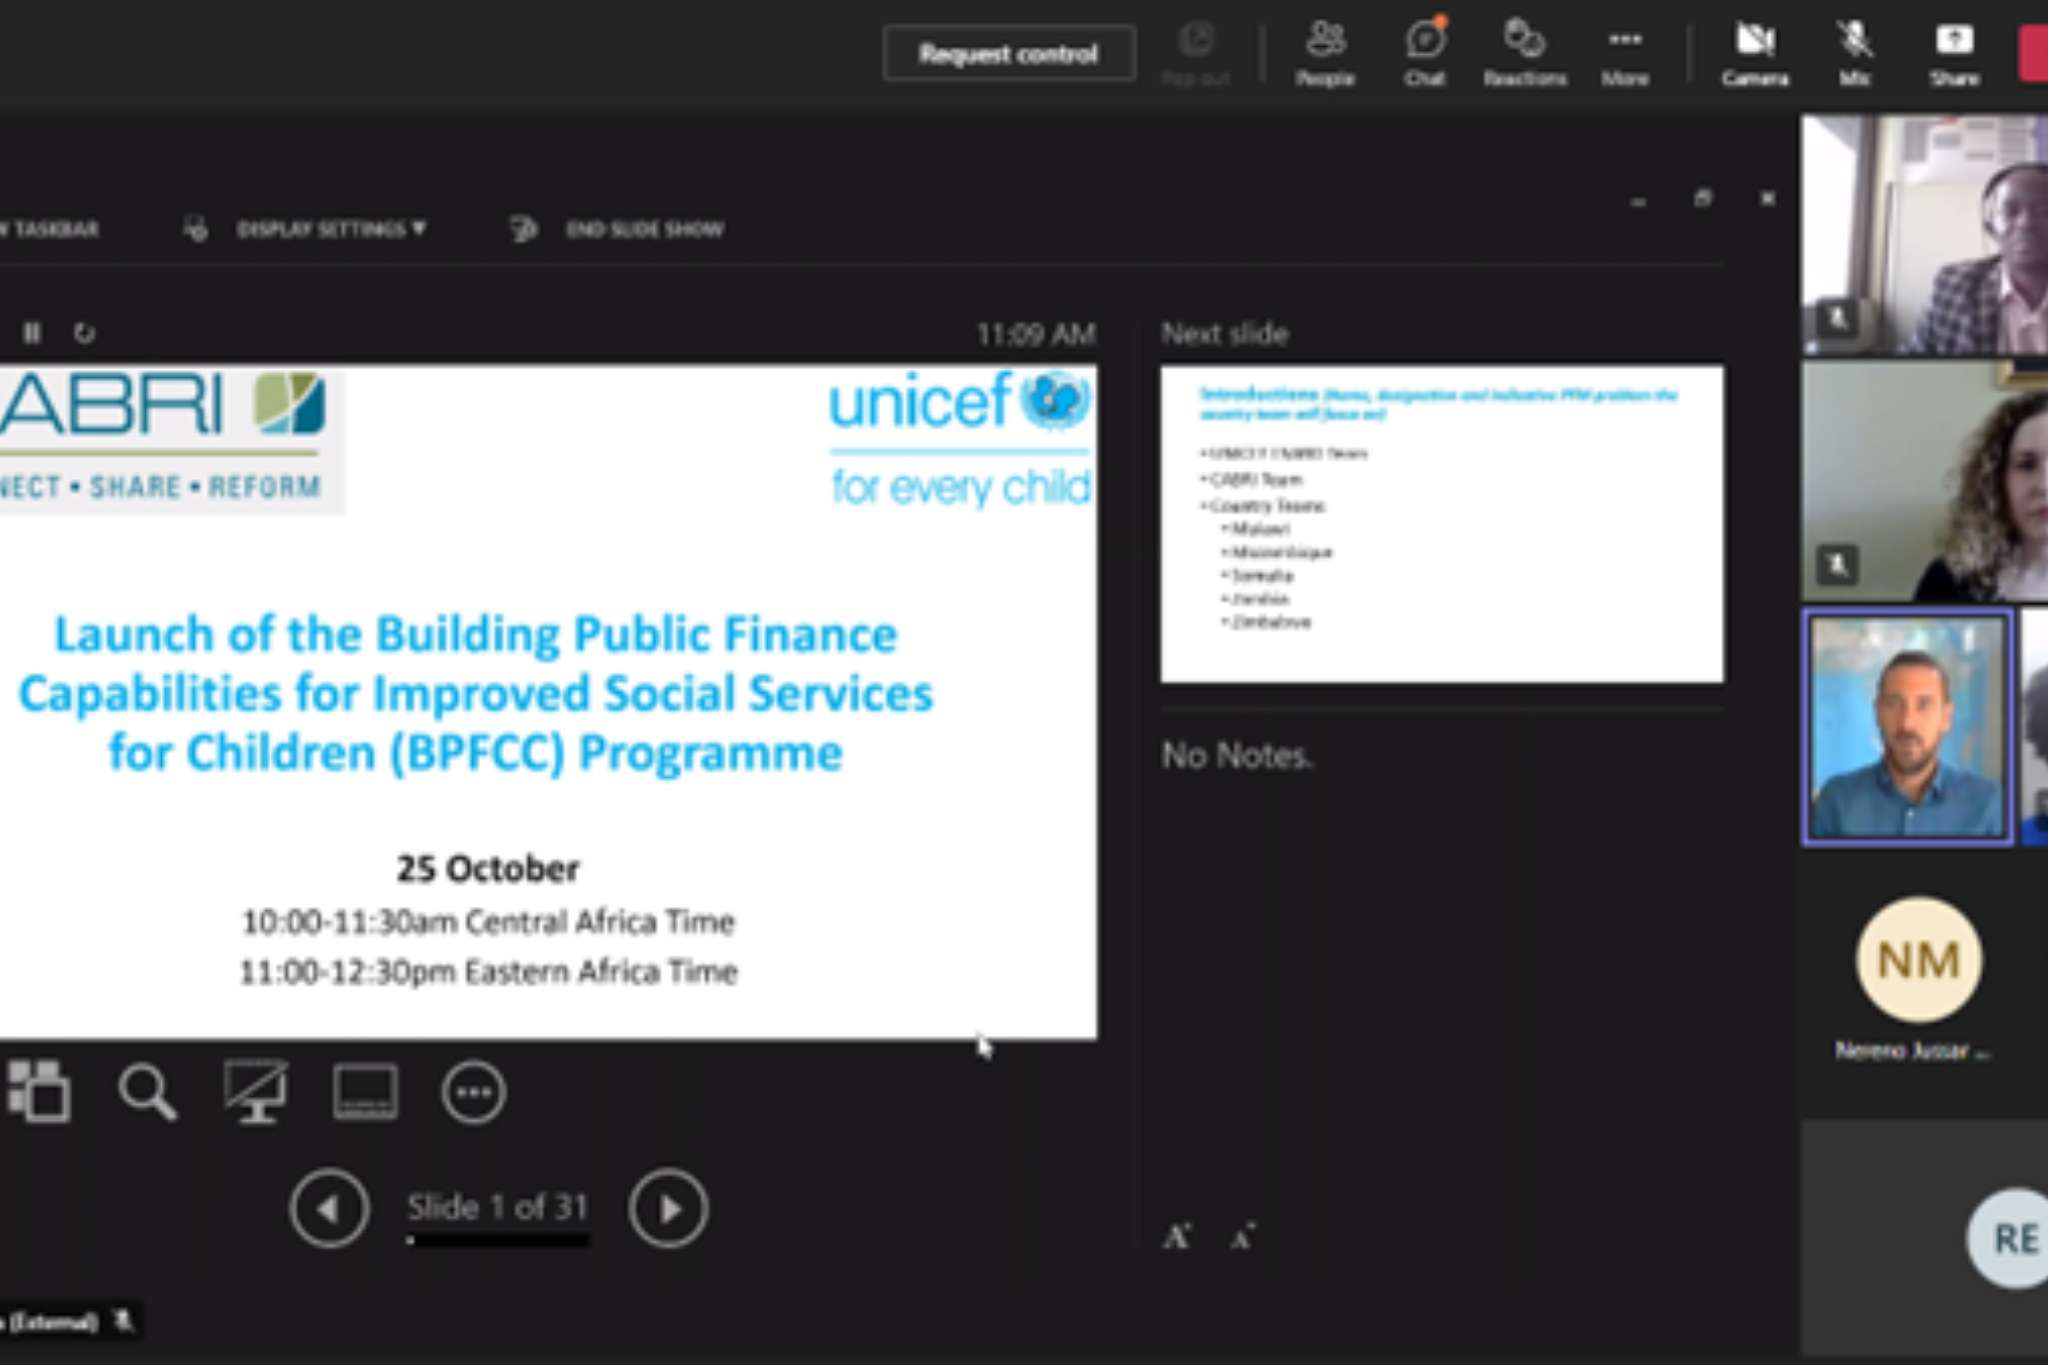 Cabri Unicef Virtual Launch Of Bpfcc Prog For Children Social Services 25 Oct